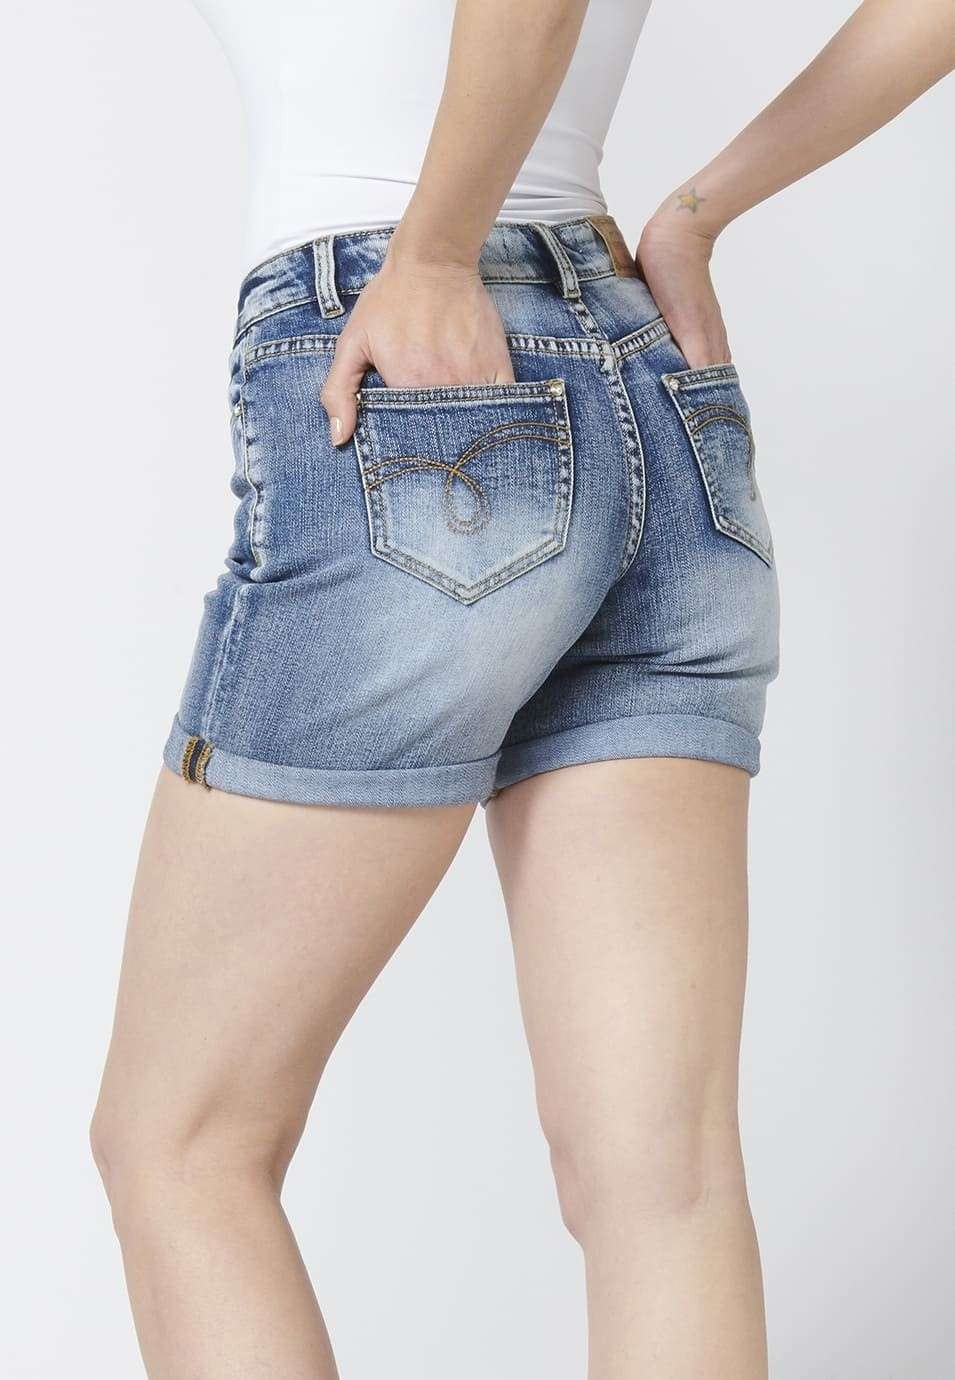 Damen-Jeansshorts, elastische Jeansshorts oberhalb des Knies mit zerrissenen Details